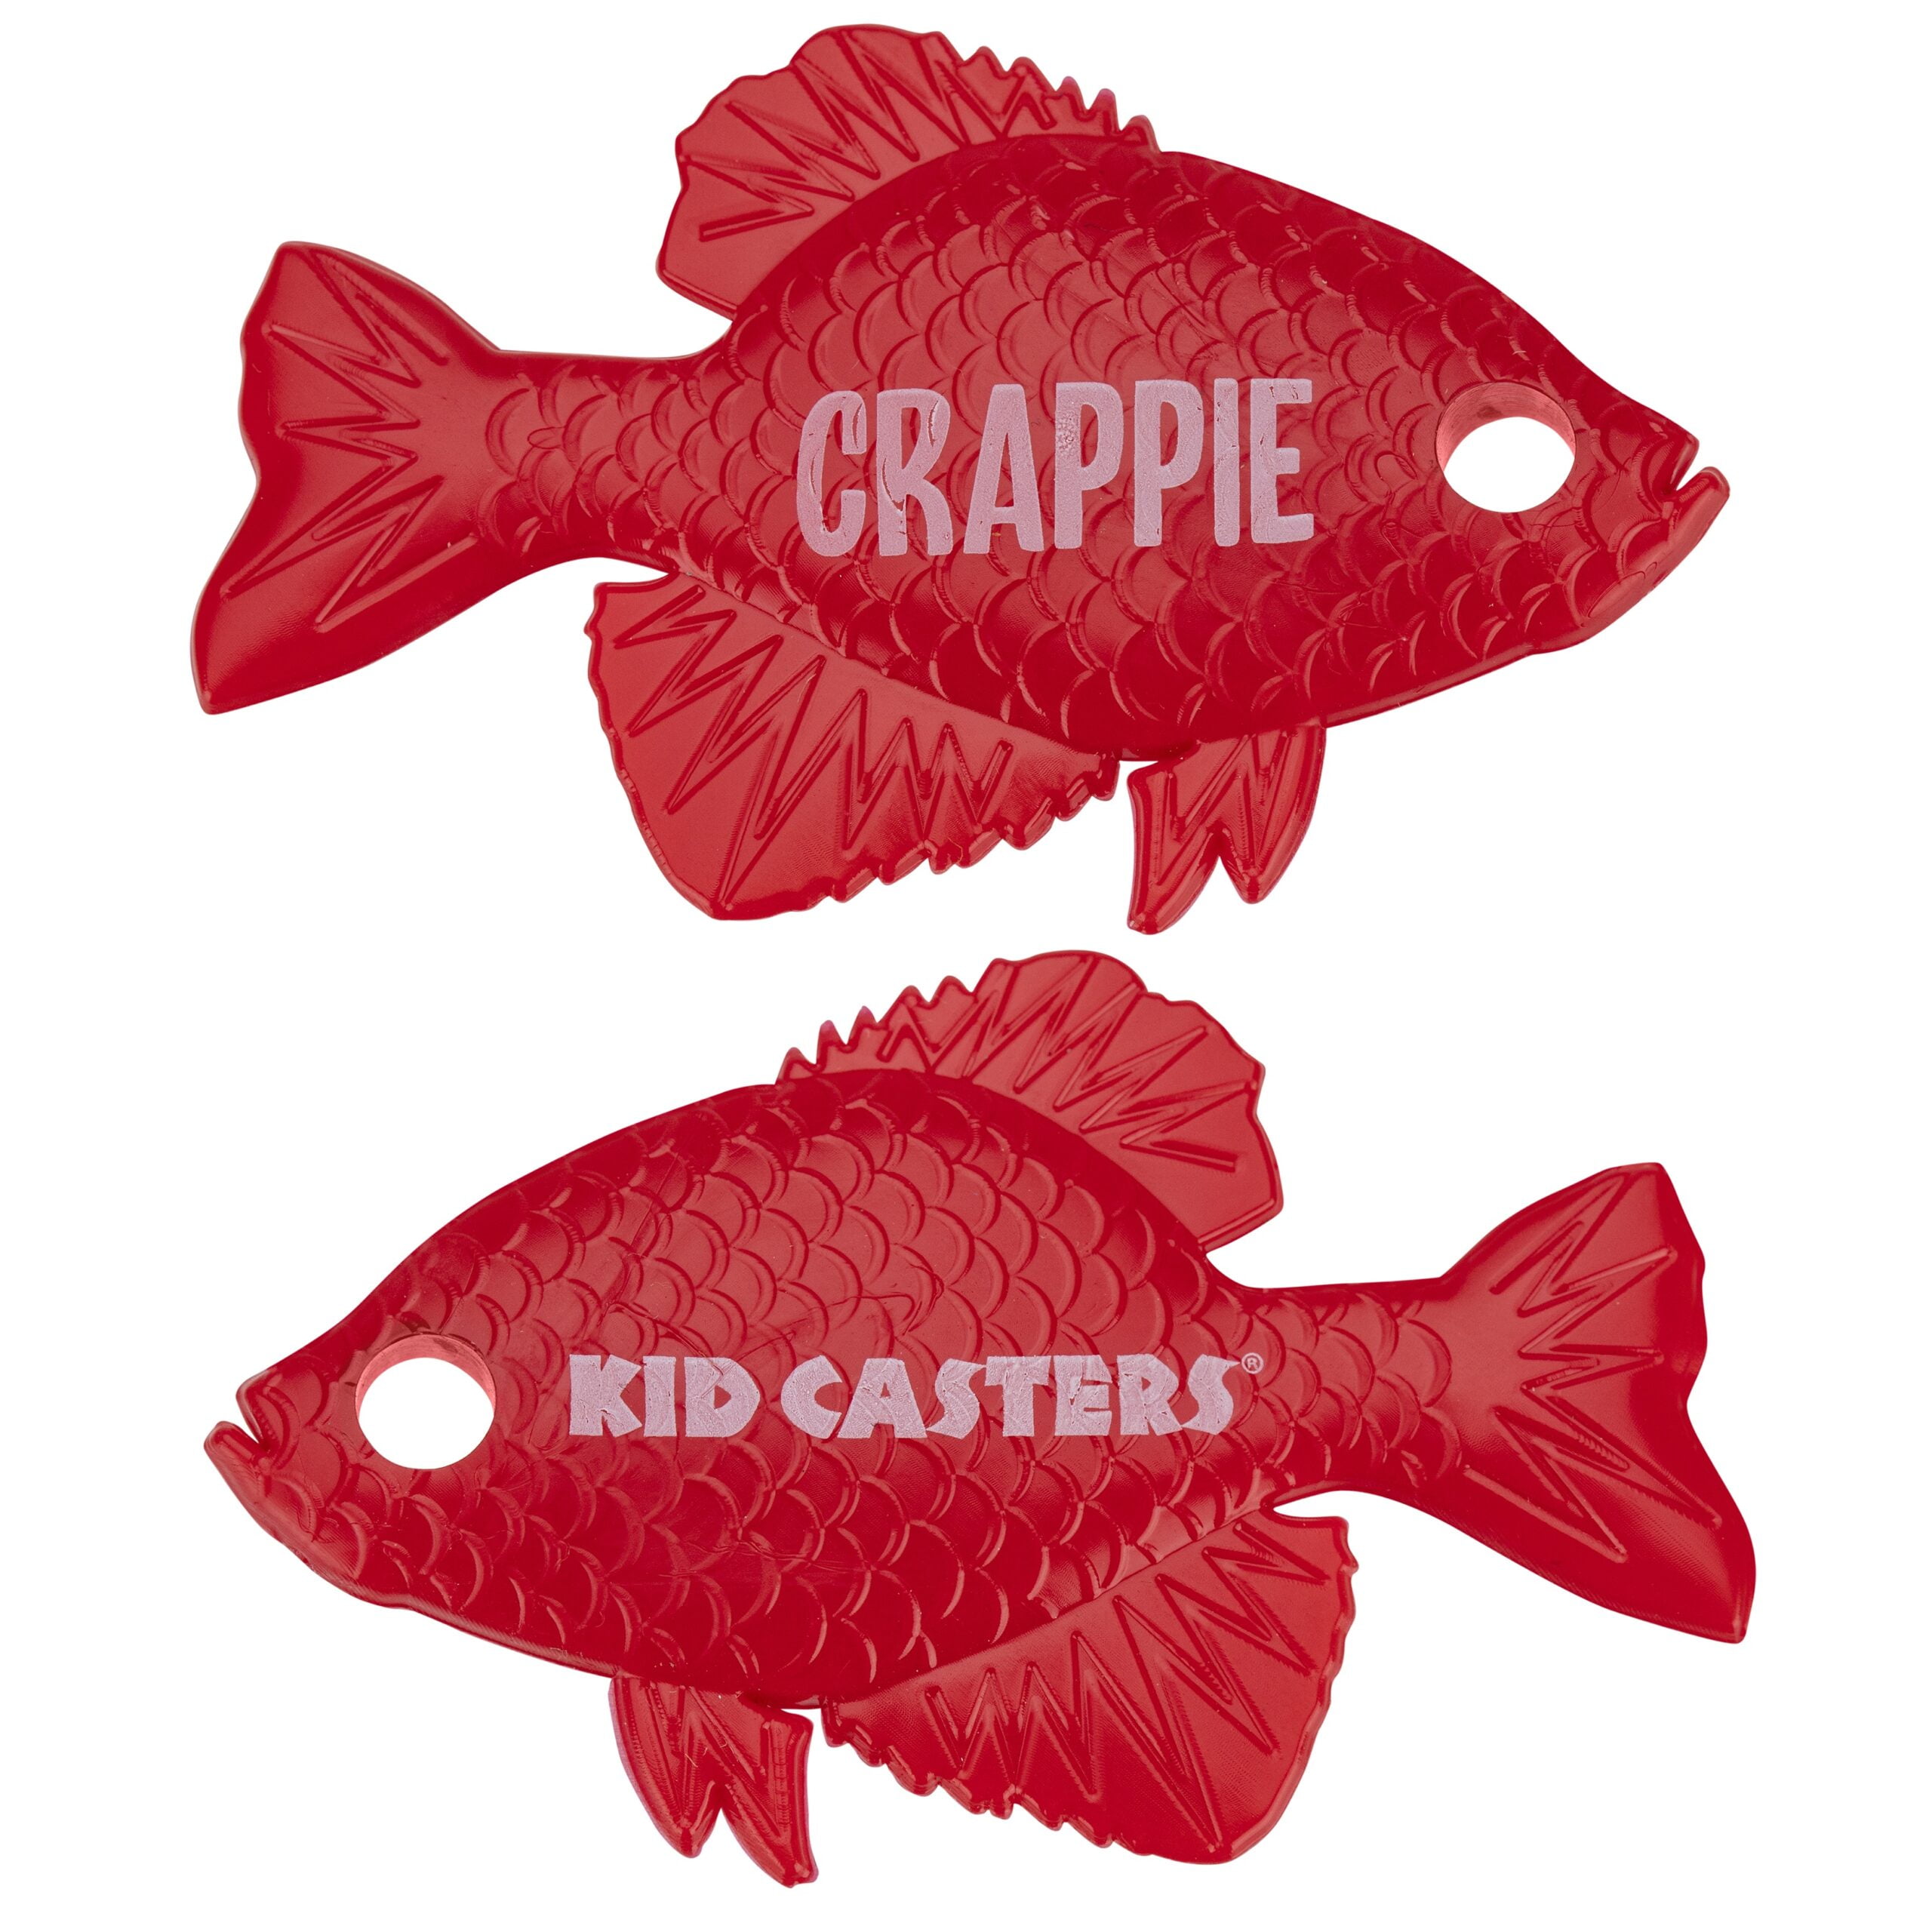 Kid Casters Nerf Youth Fishing Kit w/ Foam Casting Plug